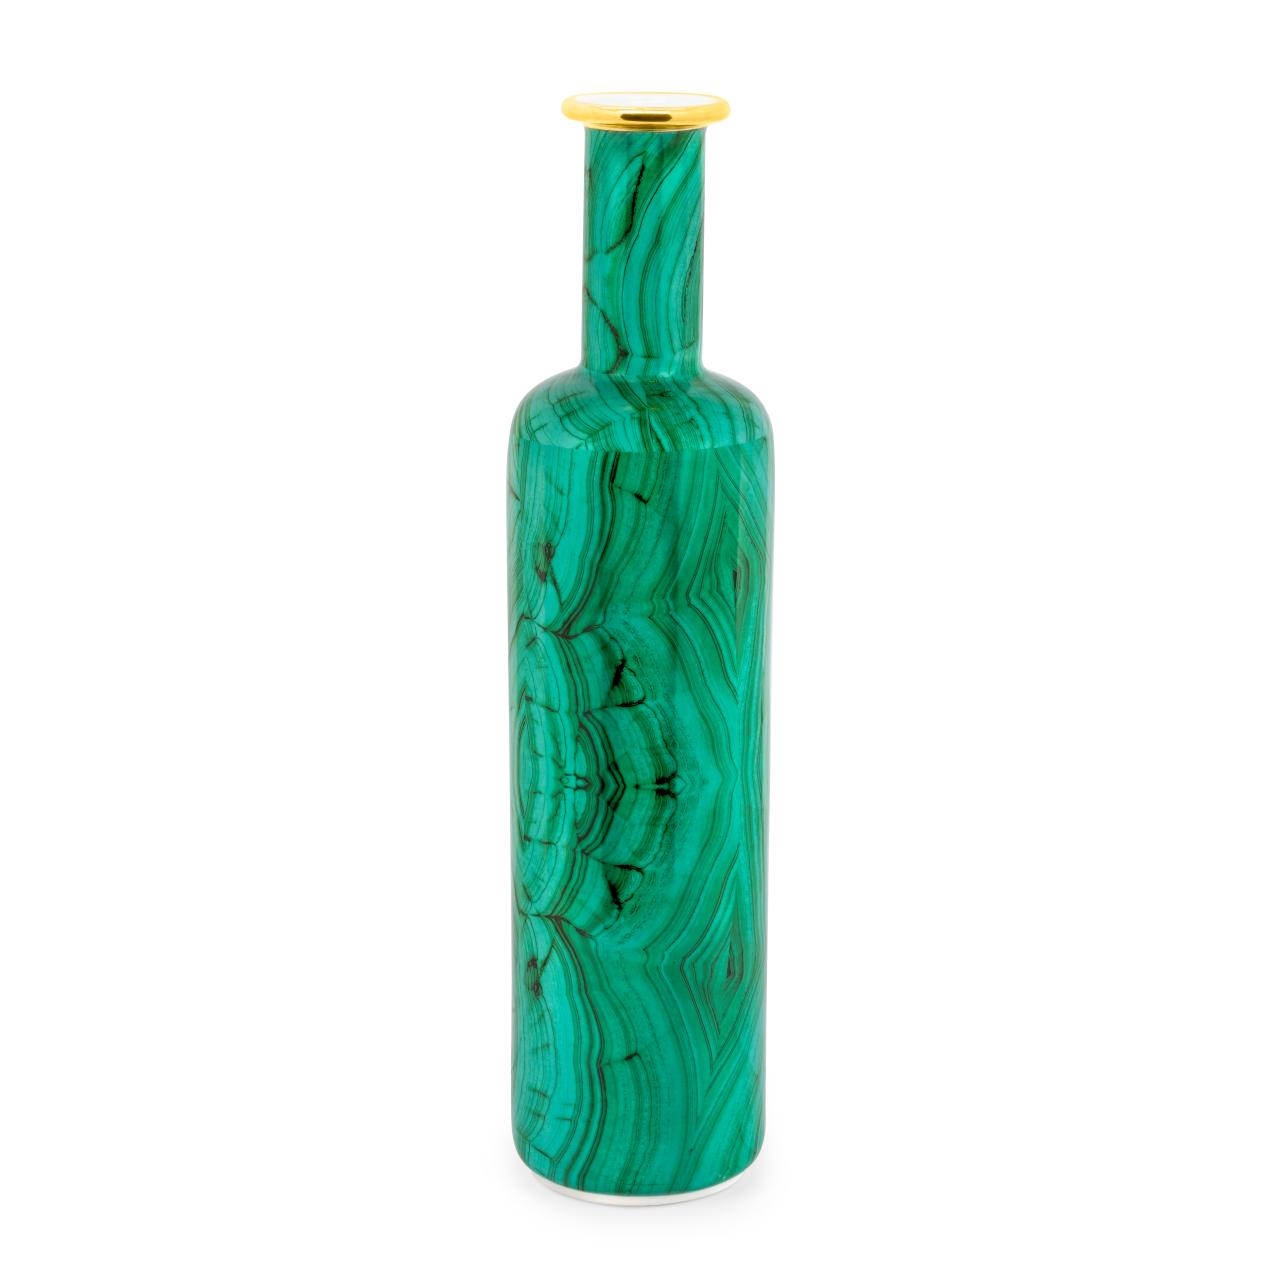 KONRAD INTERIOR SELECTION - Bottle Vase "Malaki"